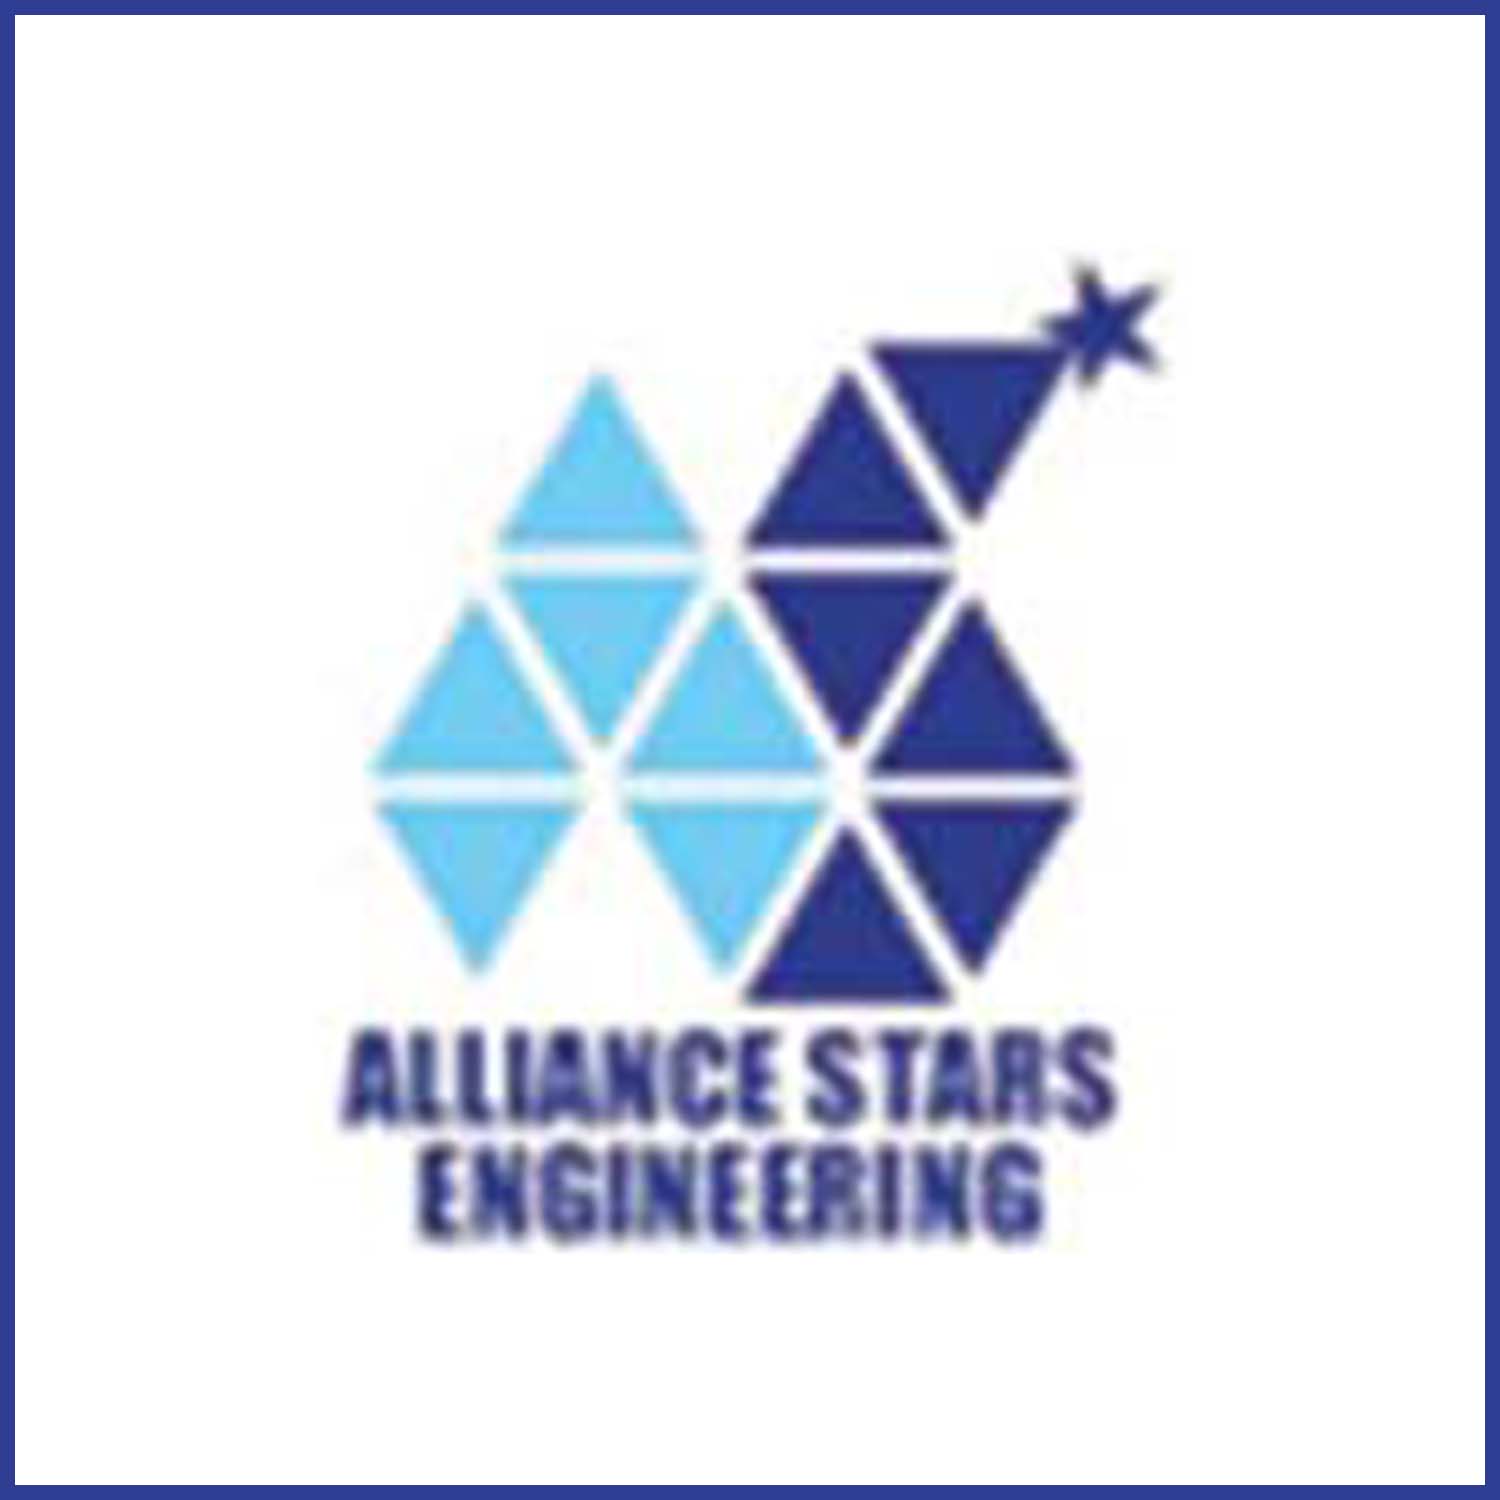 Alliance Stars Engineering Co., Ltd.